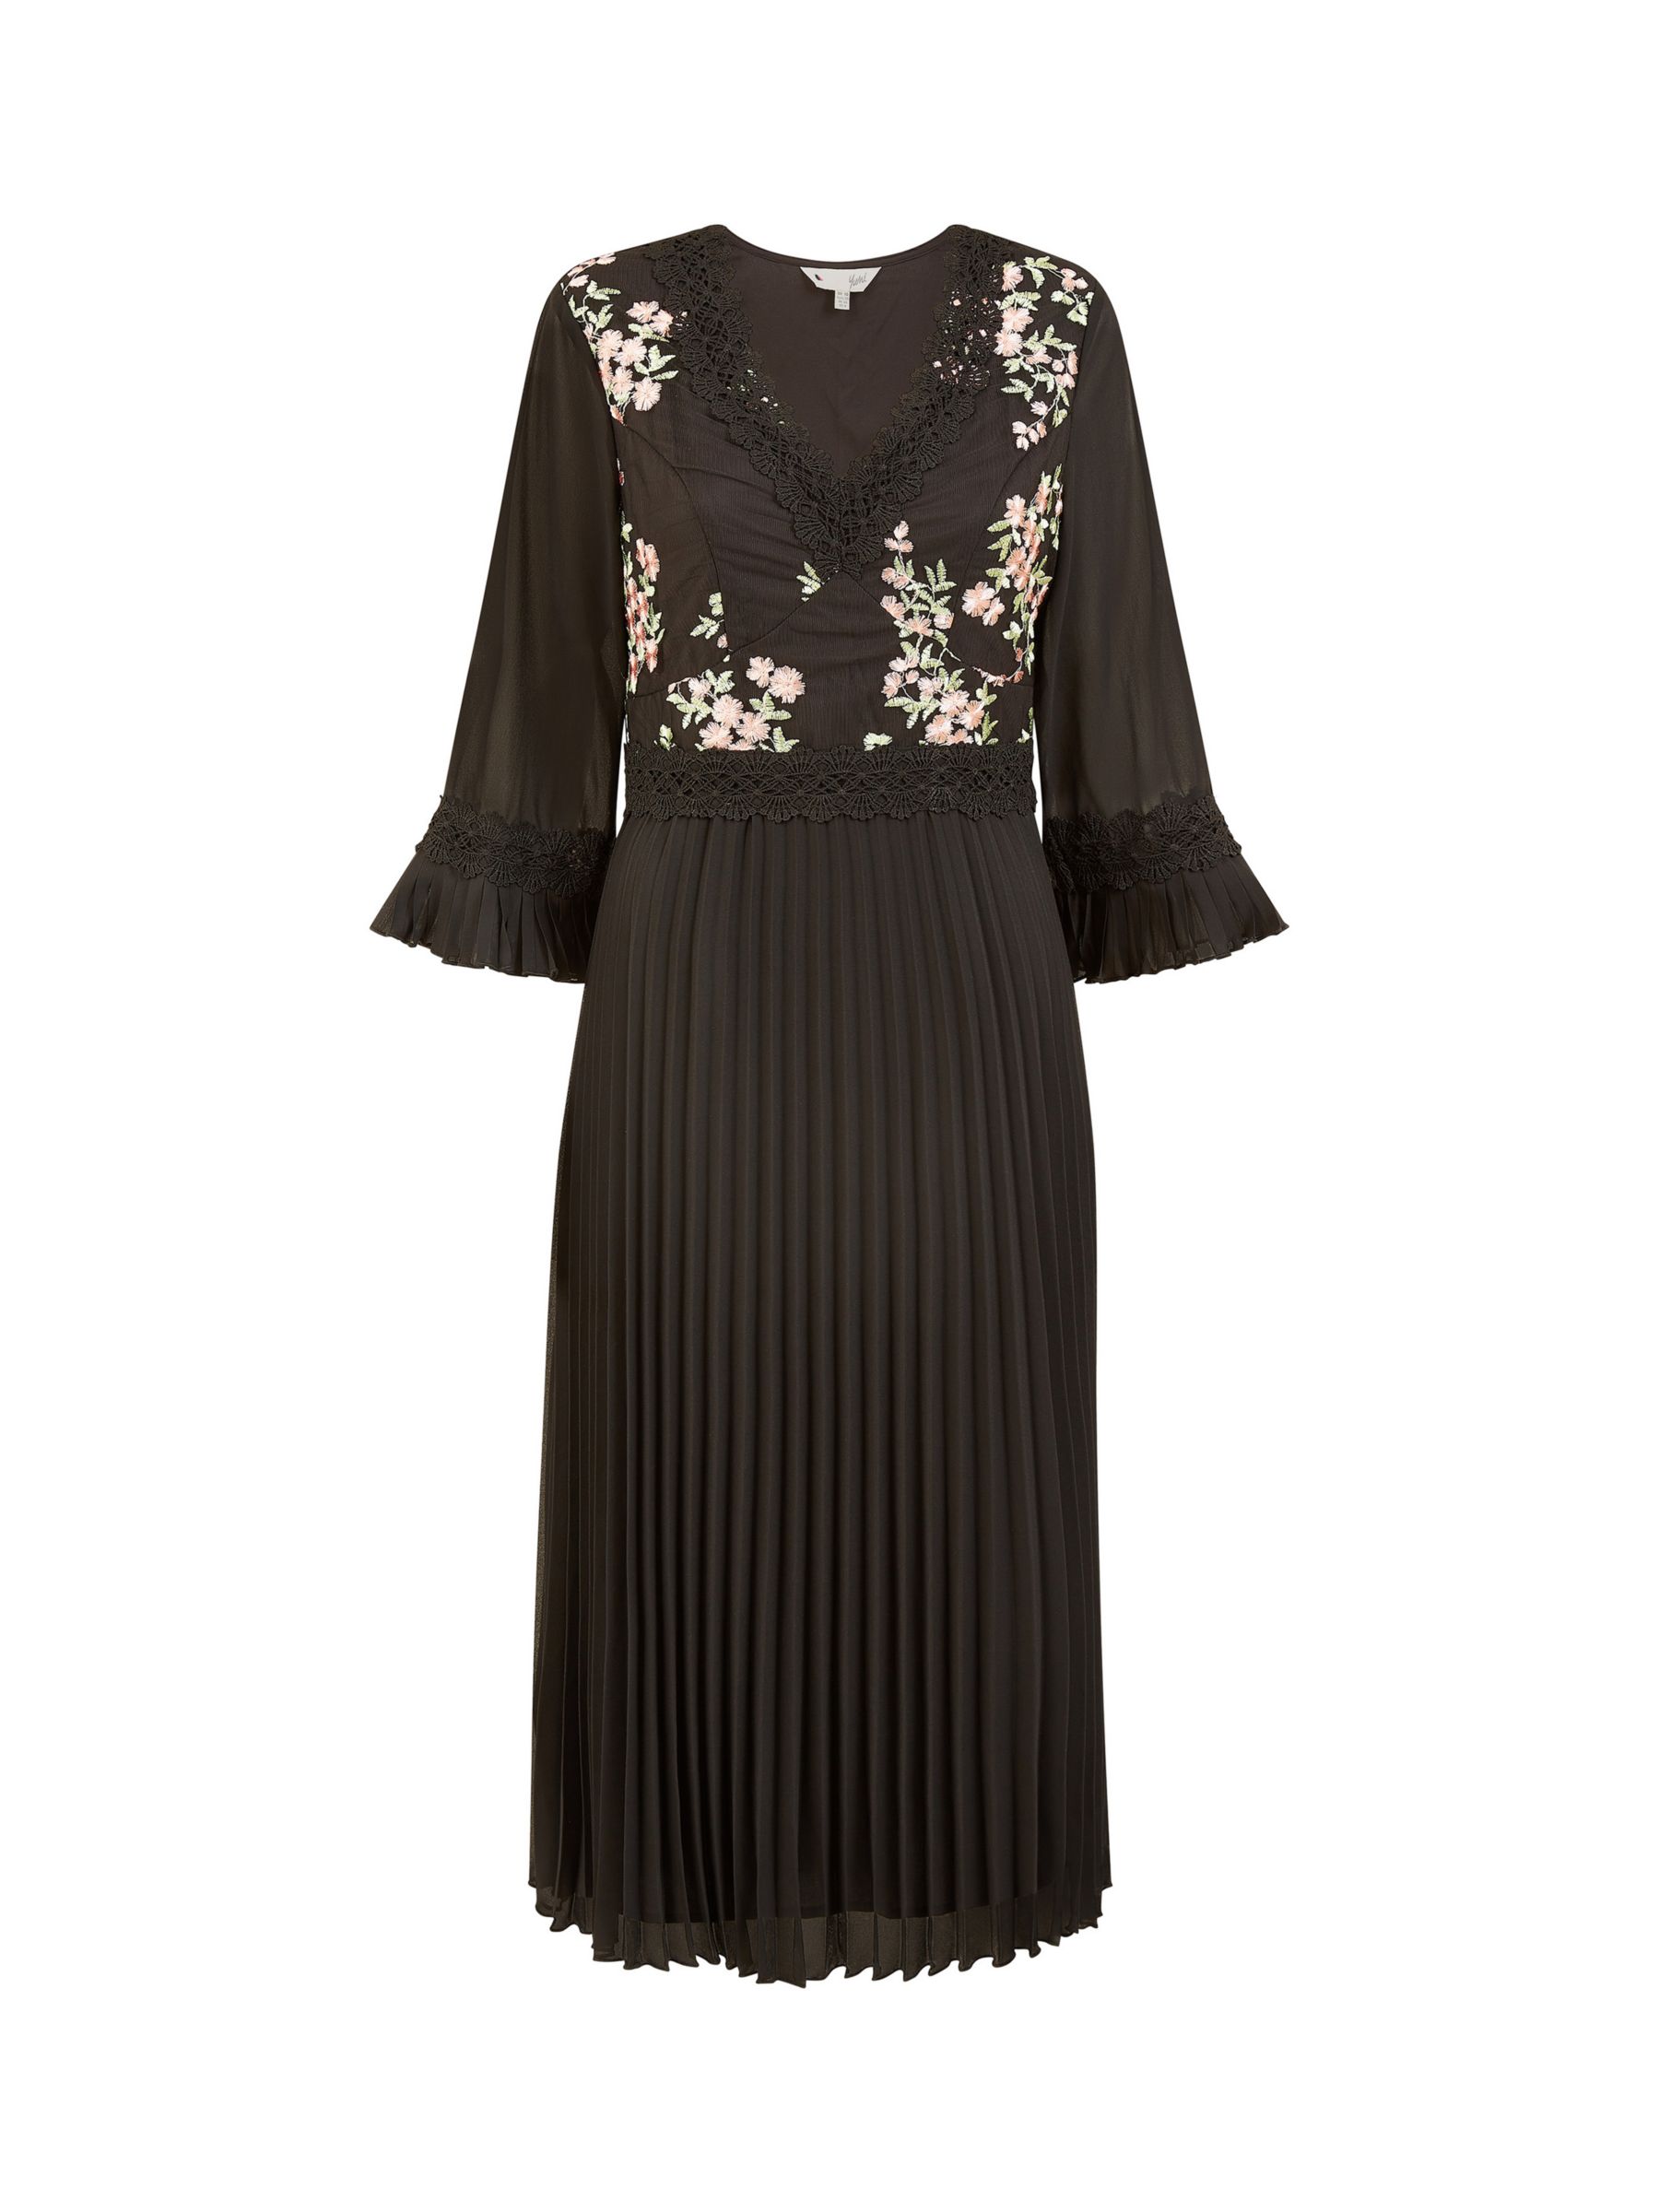 Yumi Embroidered Panel Midi Dress With Pleats, Black/Multi, 12